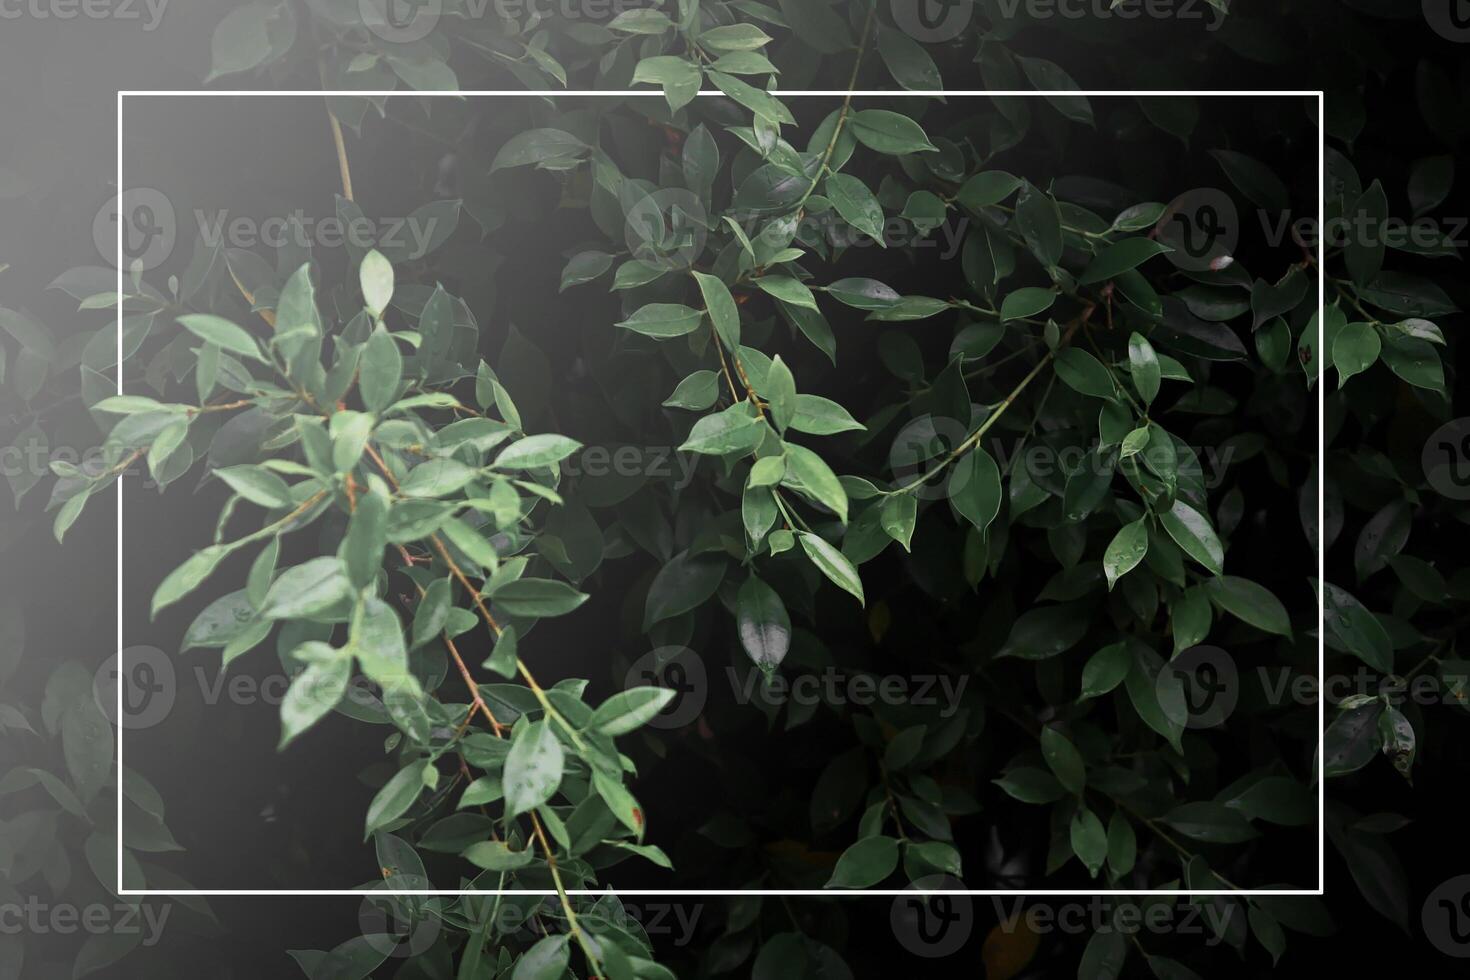 donker groen blad achtergrond, donker toon, klein bladeren, tropisch bladeren, donker groen blad behang, blad achtergrond met wit foto kader.